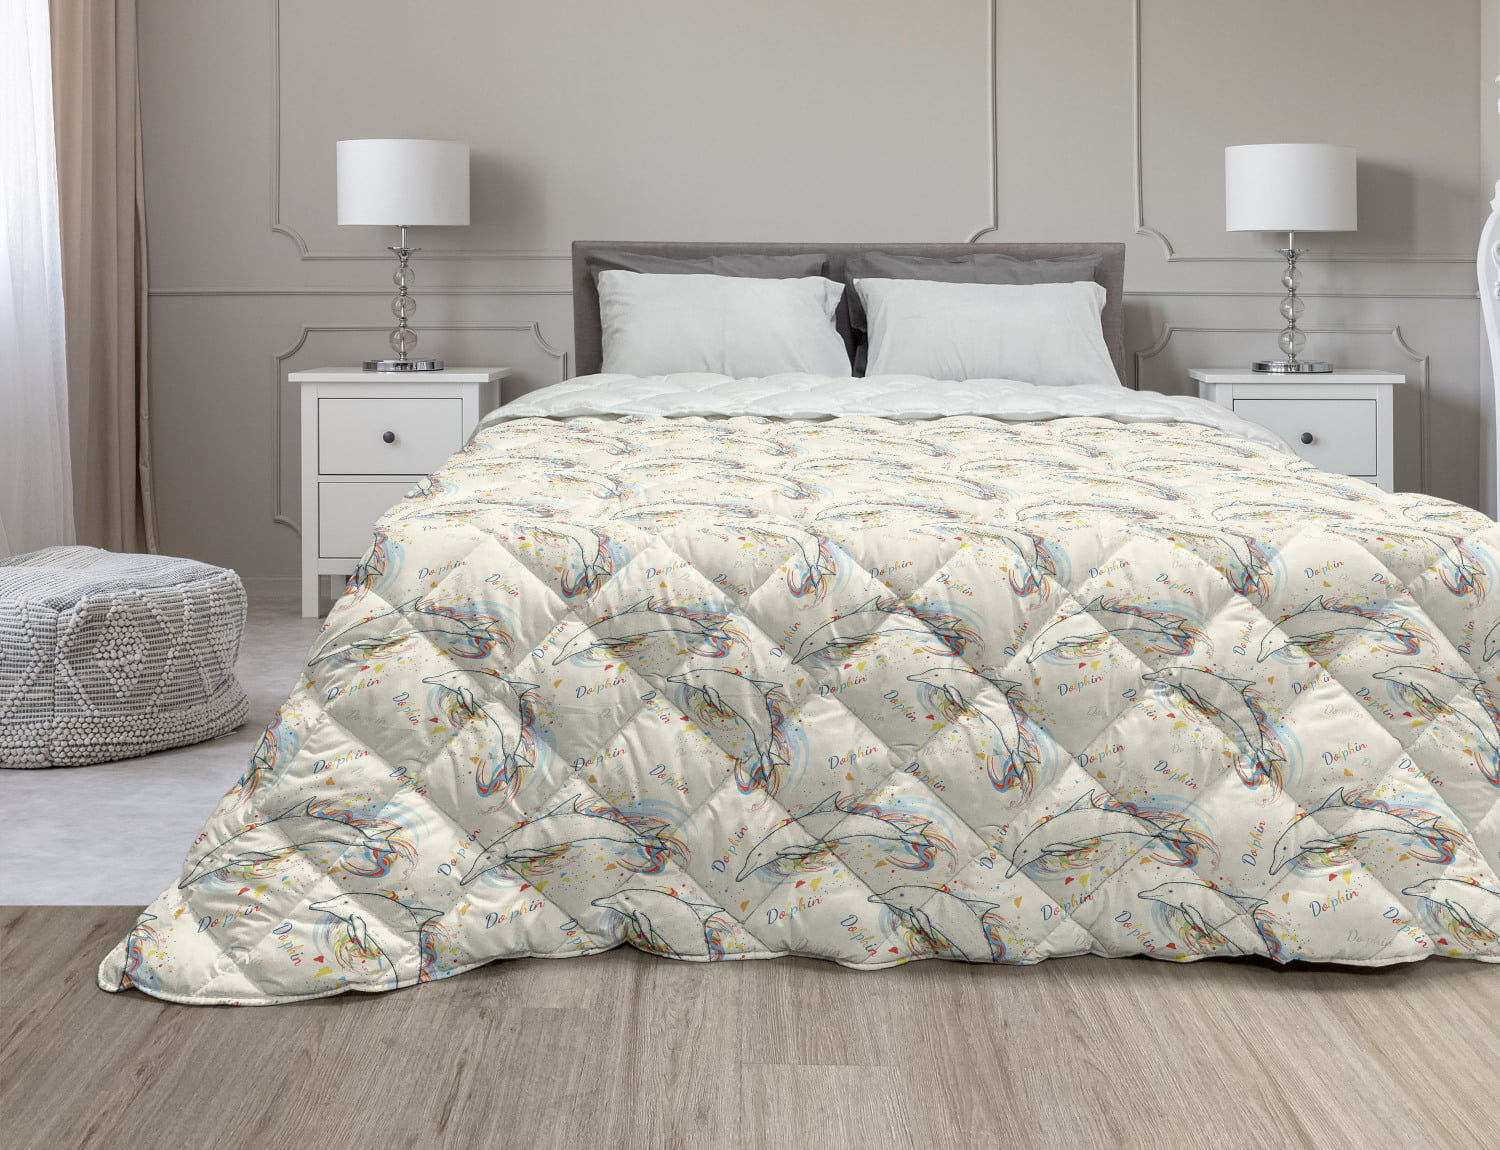 Details about   Tan Pillow Sham Decorative Pillowcase 3 Sizes Bedroom Decor Ambesonne 